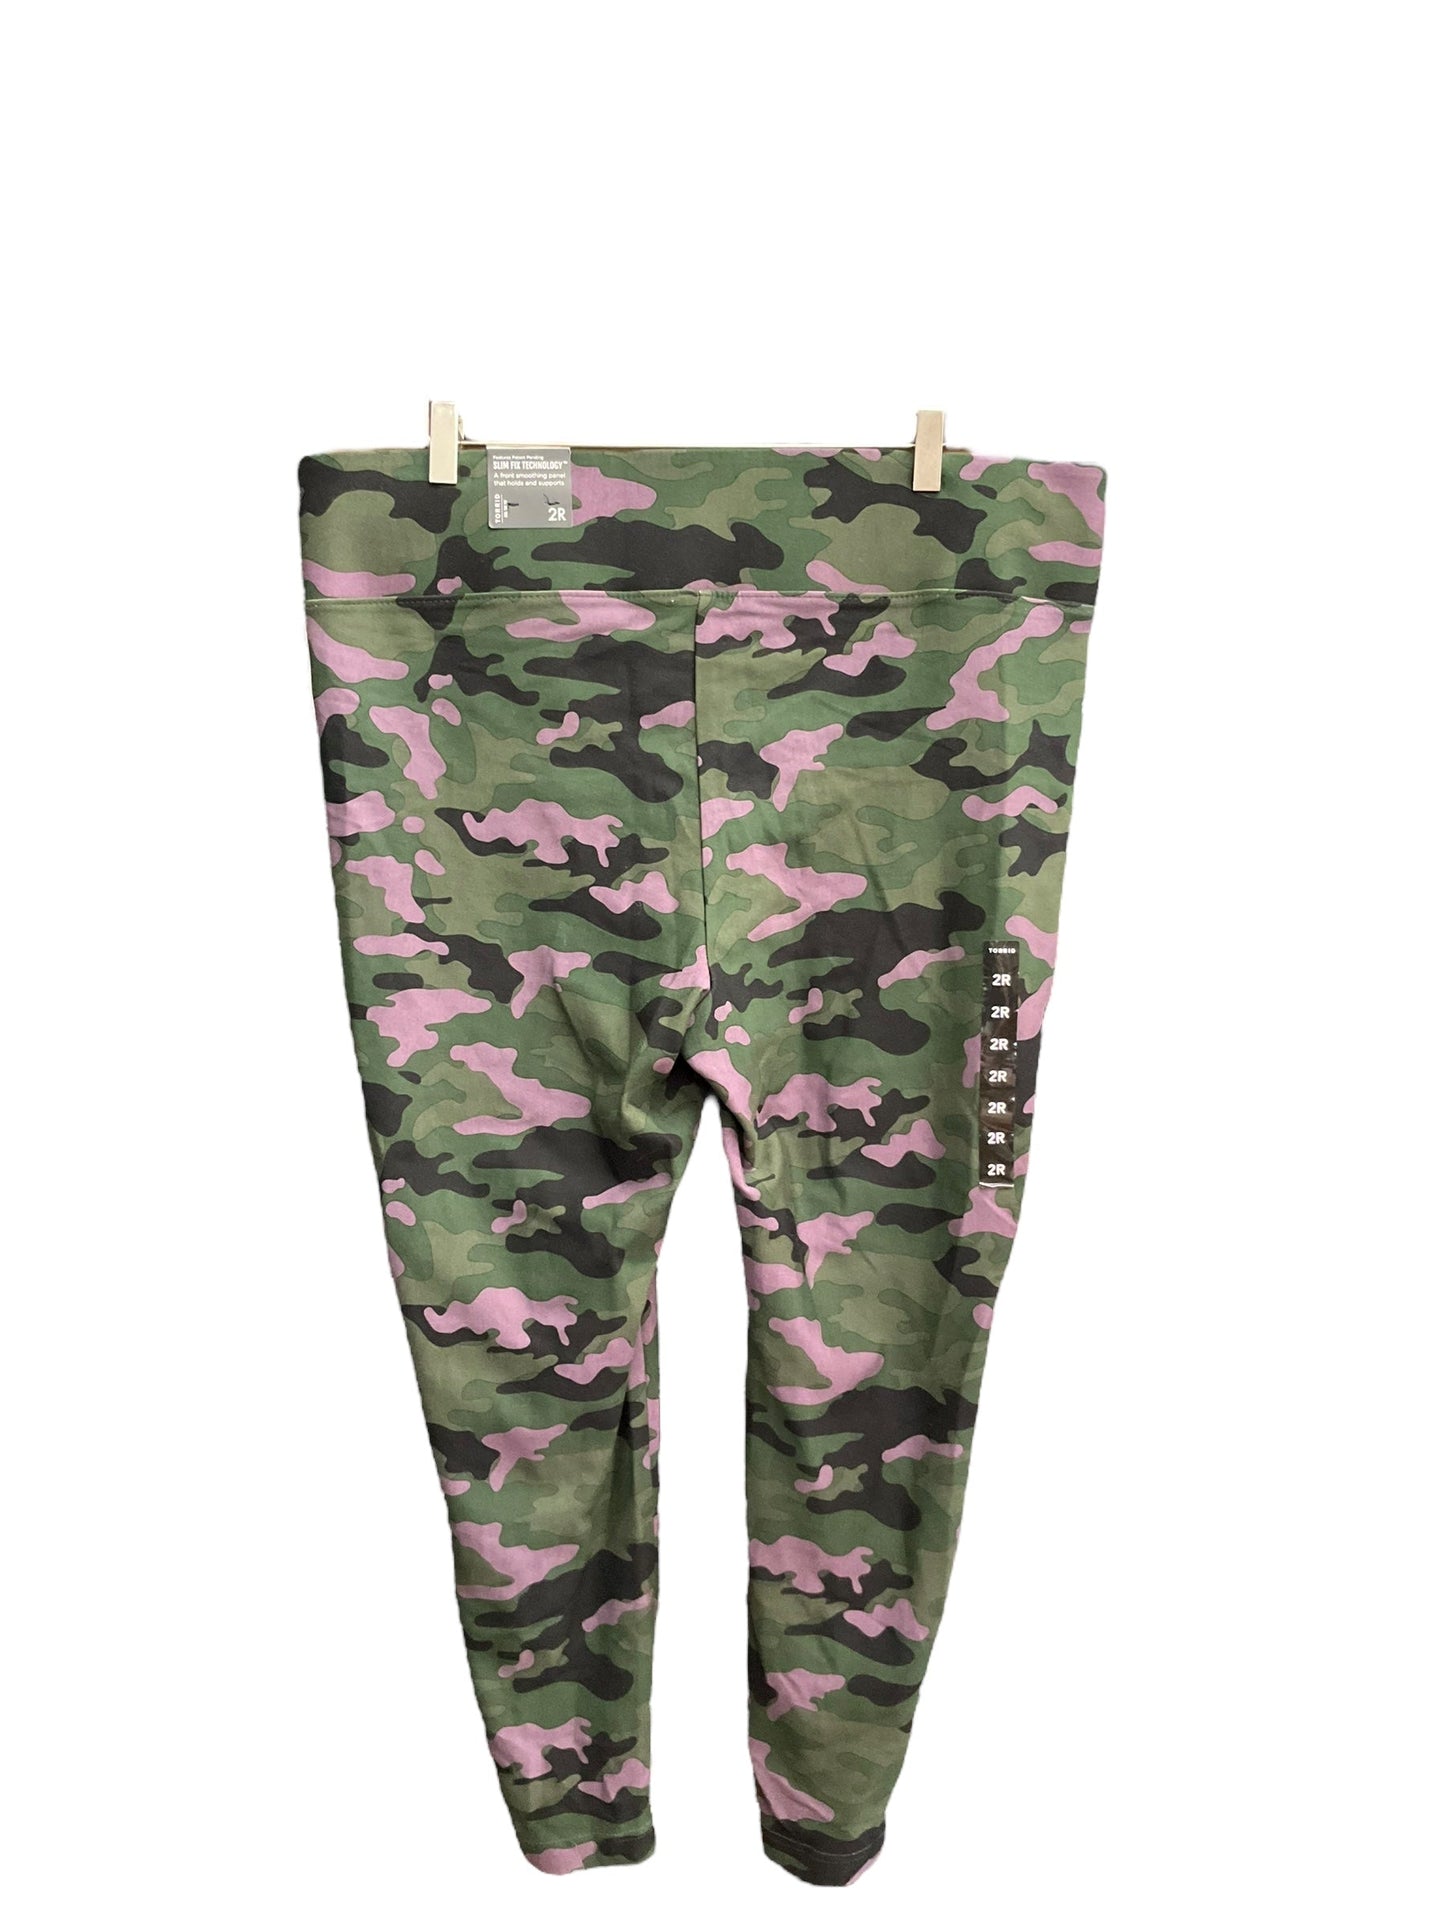 Camouflage Print Pants Leggings Torrid, Size 20